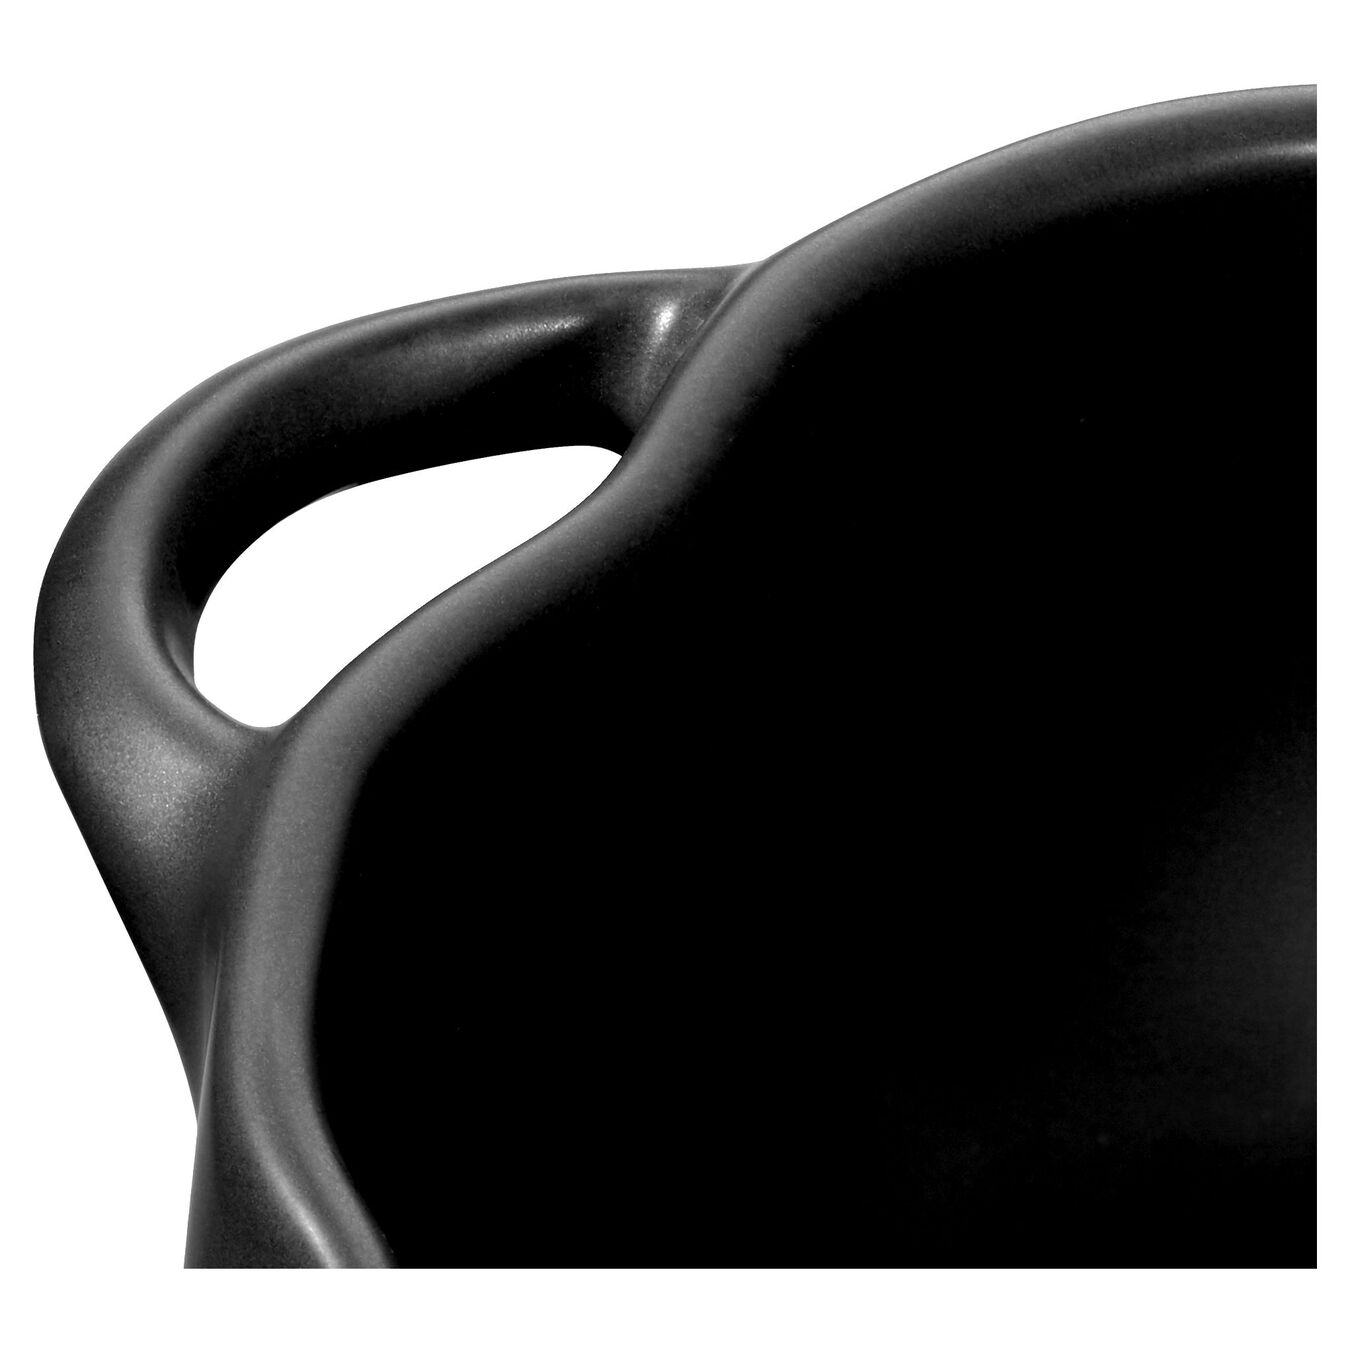 Ceramic Cocotte | Siyah | 12 cm | 500 ml | Balkabağı,,large 4